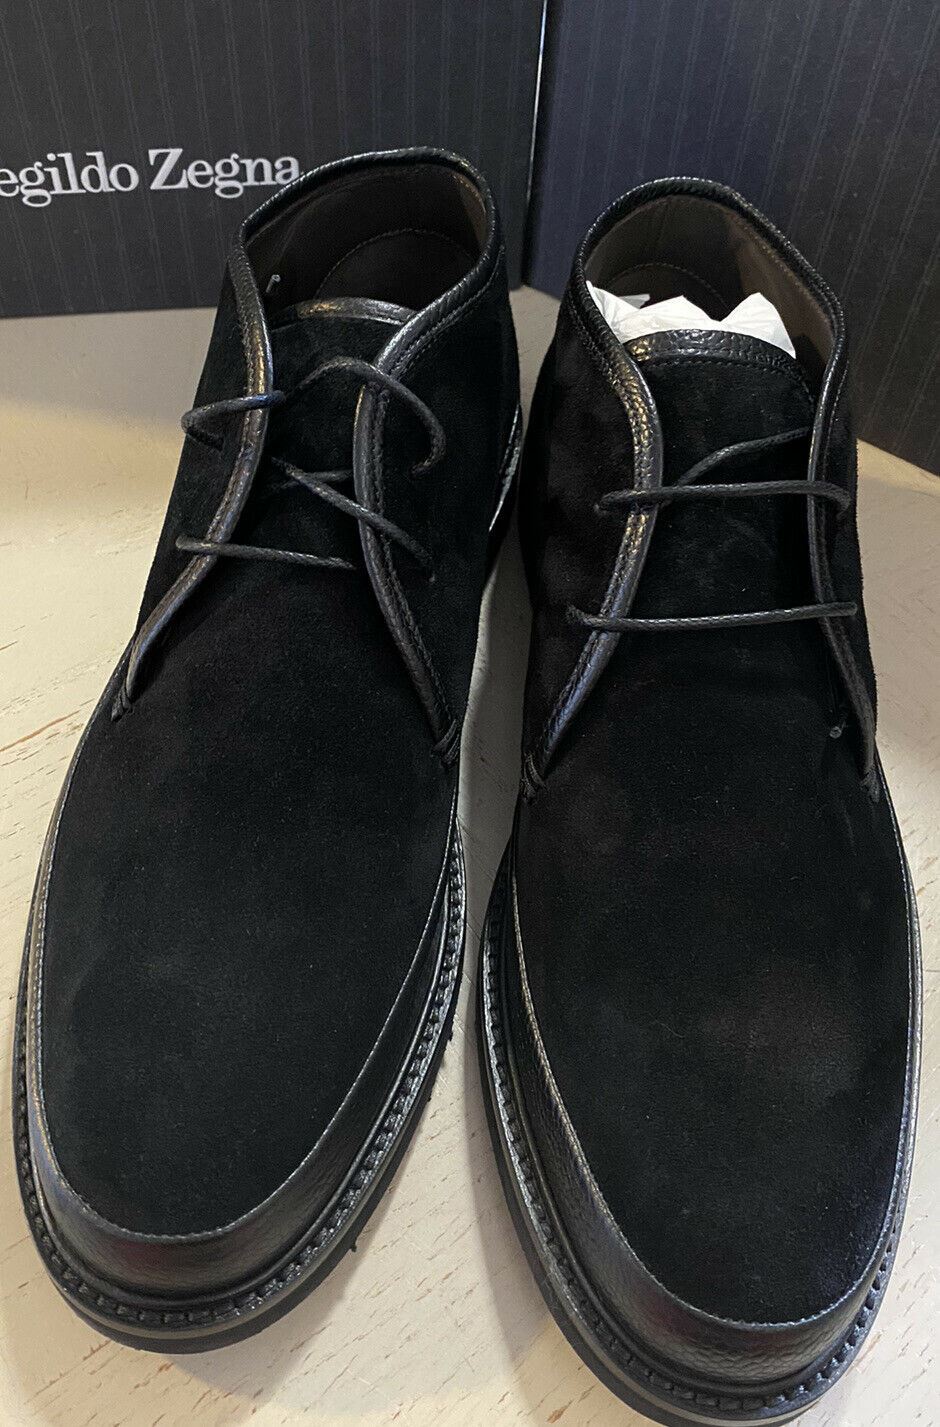 New $650 Ermenegildo Zegna Suede/Leather Boots Shoes Black 11 US Italy